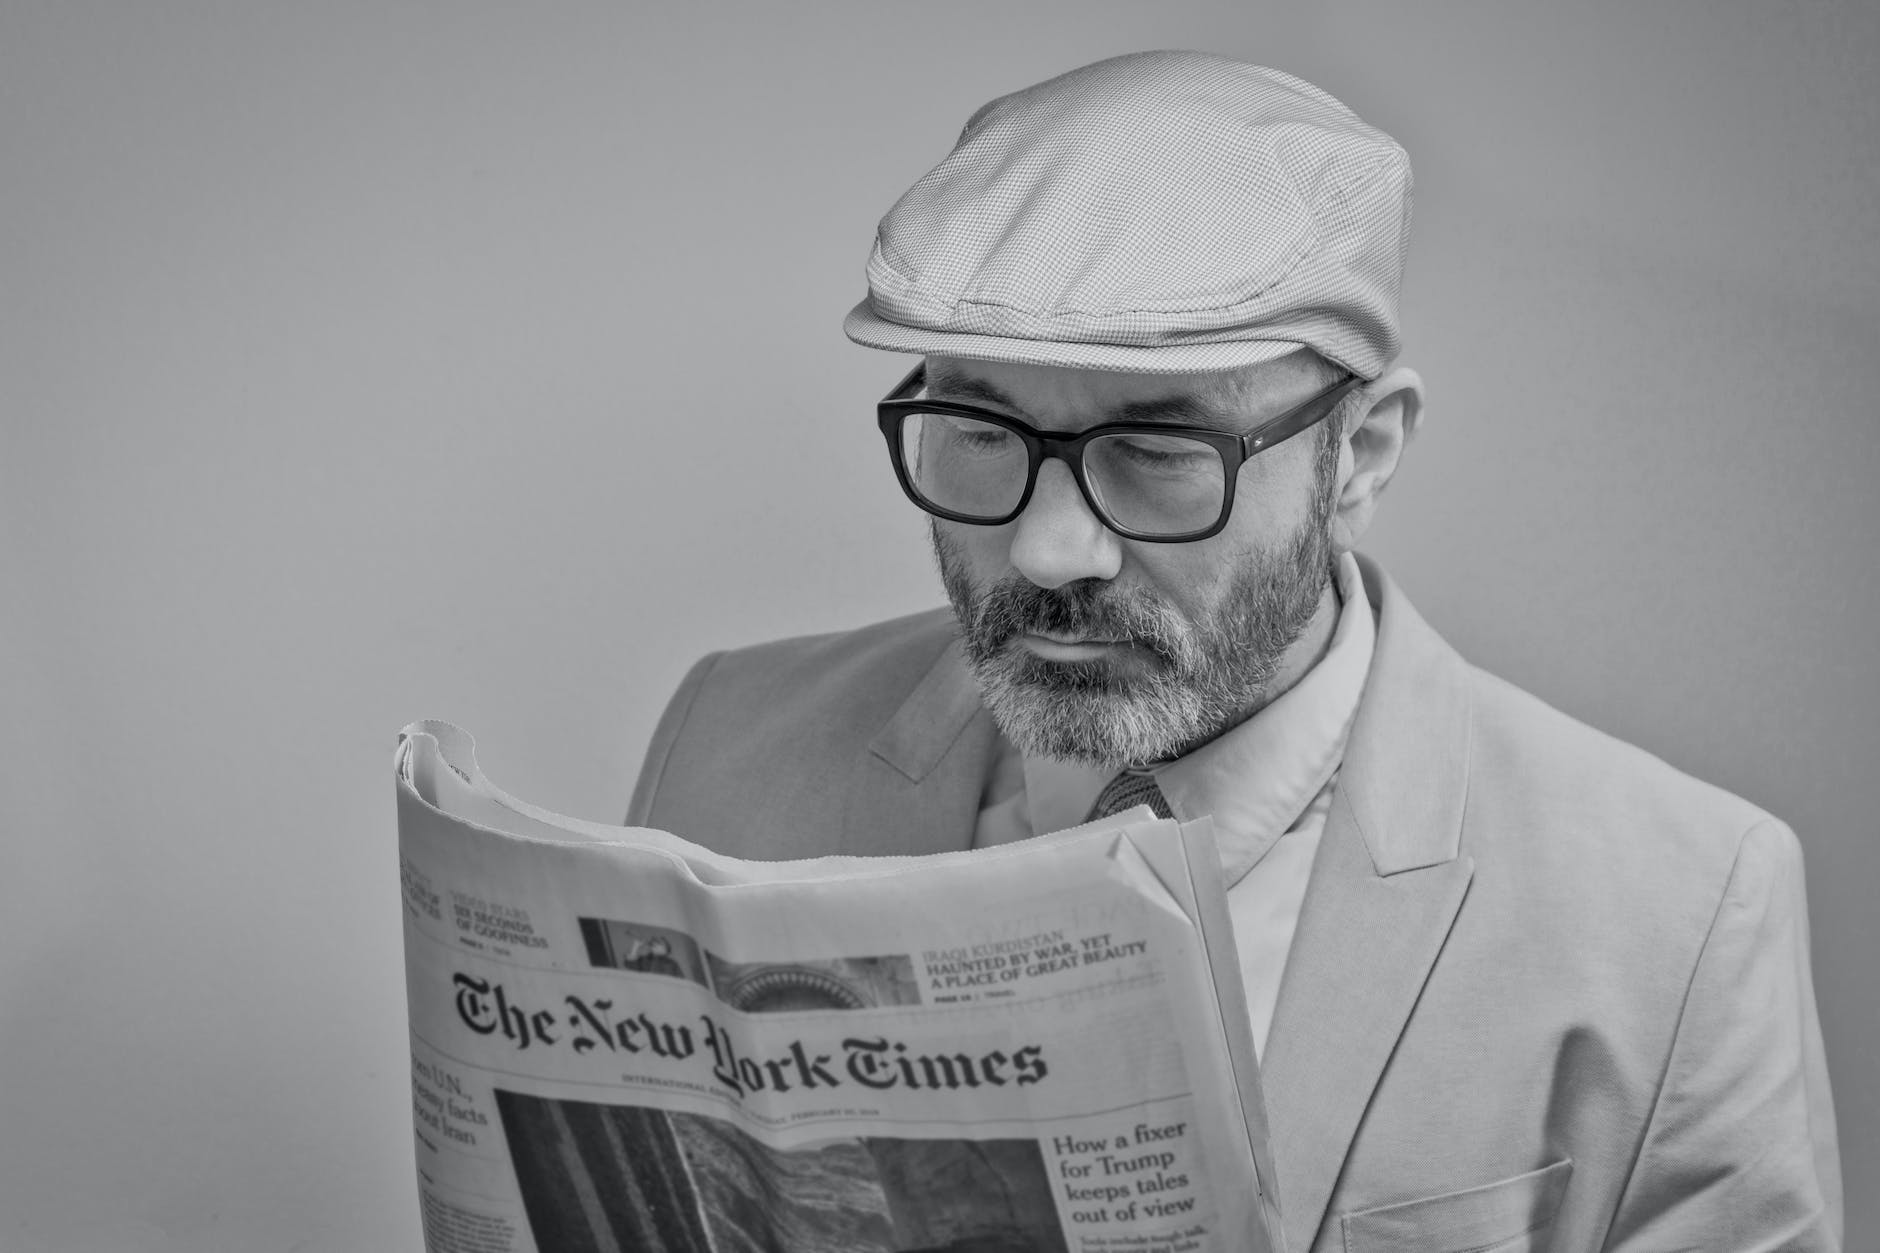 man reading a newspaper